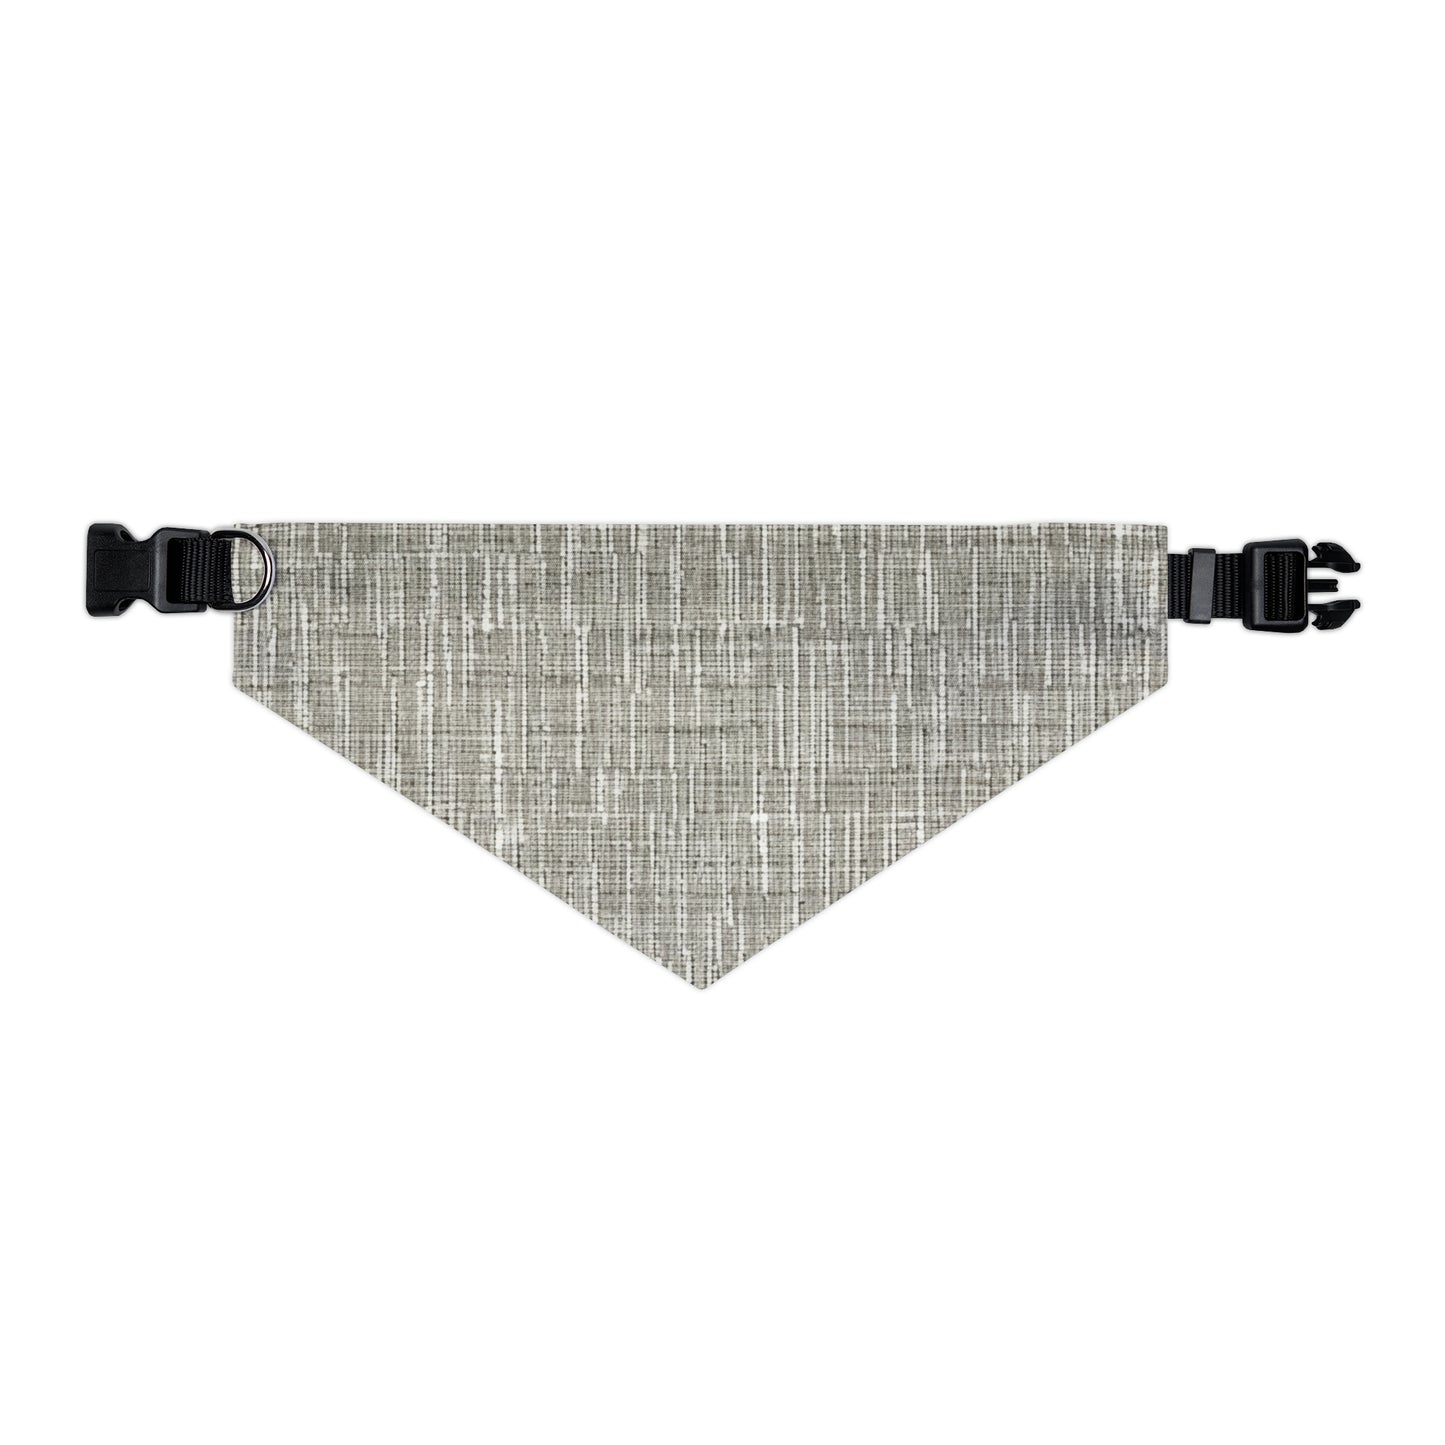 Silver Grey: Denim-Inspired, Contemporary Fabric Design - Dog & Pet Bandana Collar